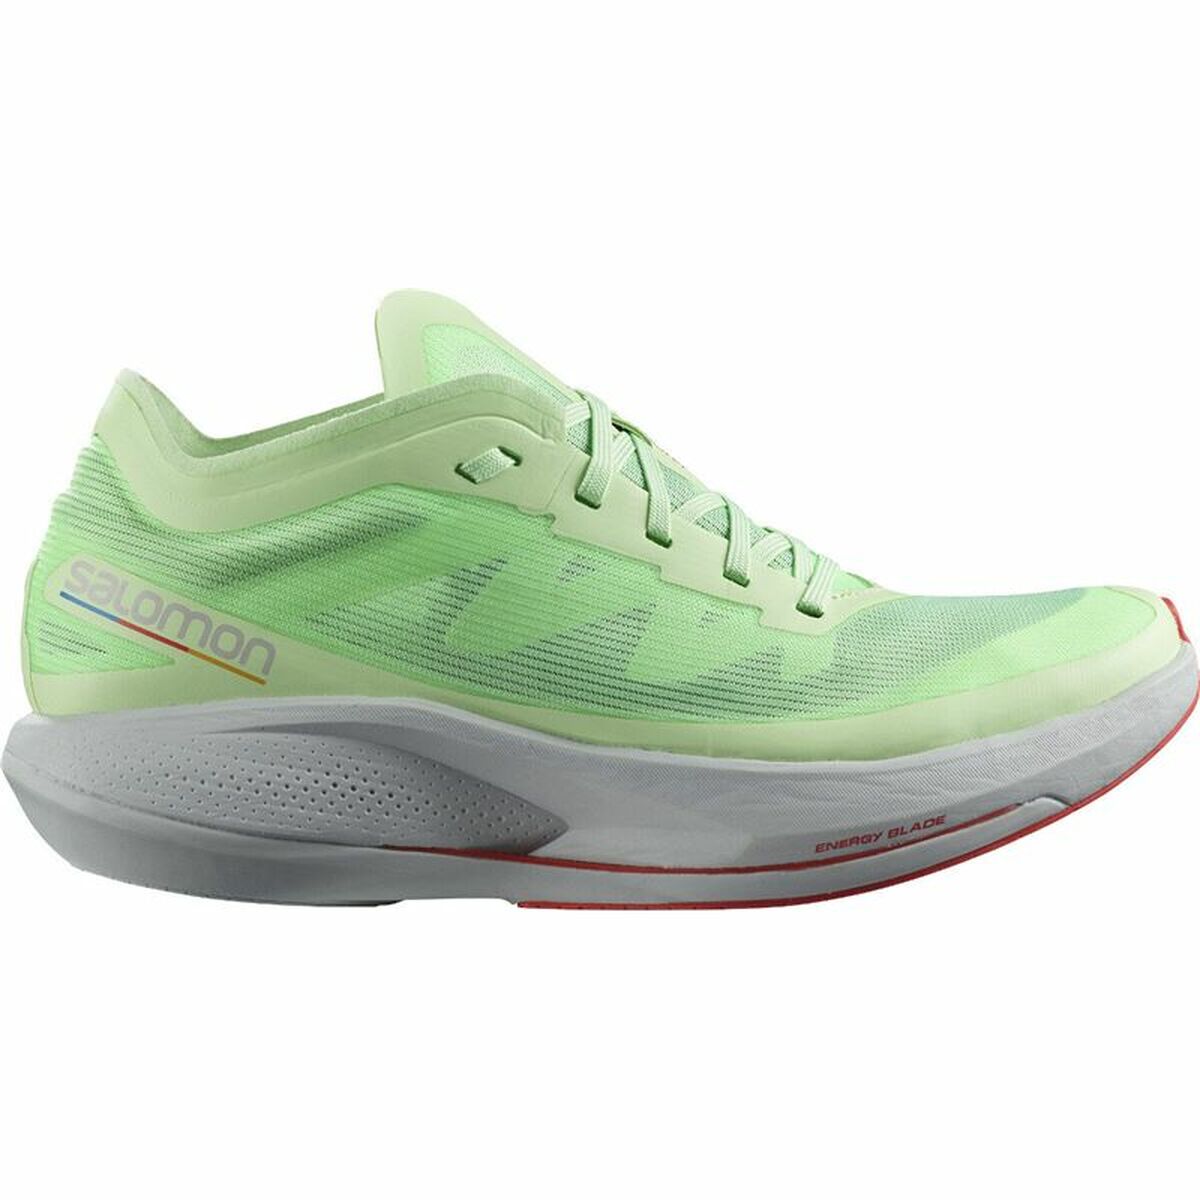 Chaussures de Running pour Adultes Salomon Phantasm Vert clair